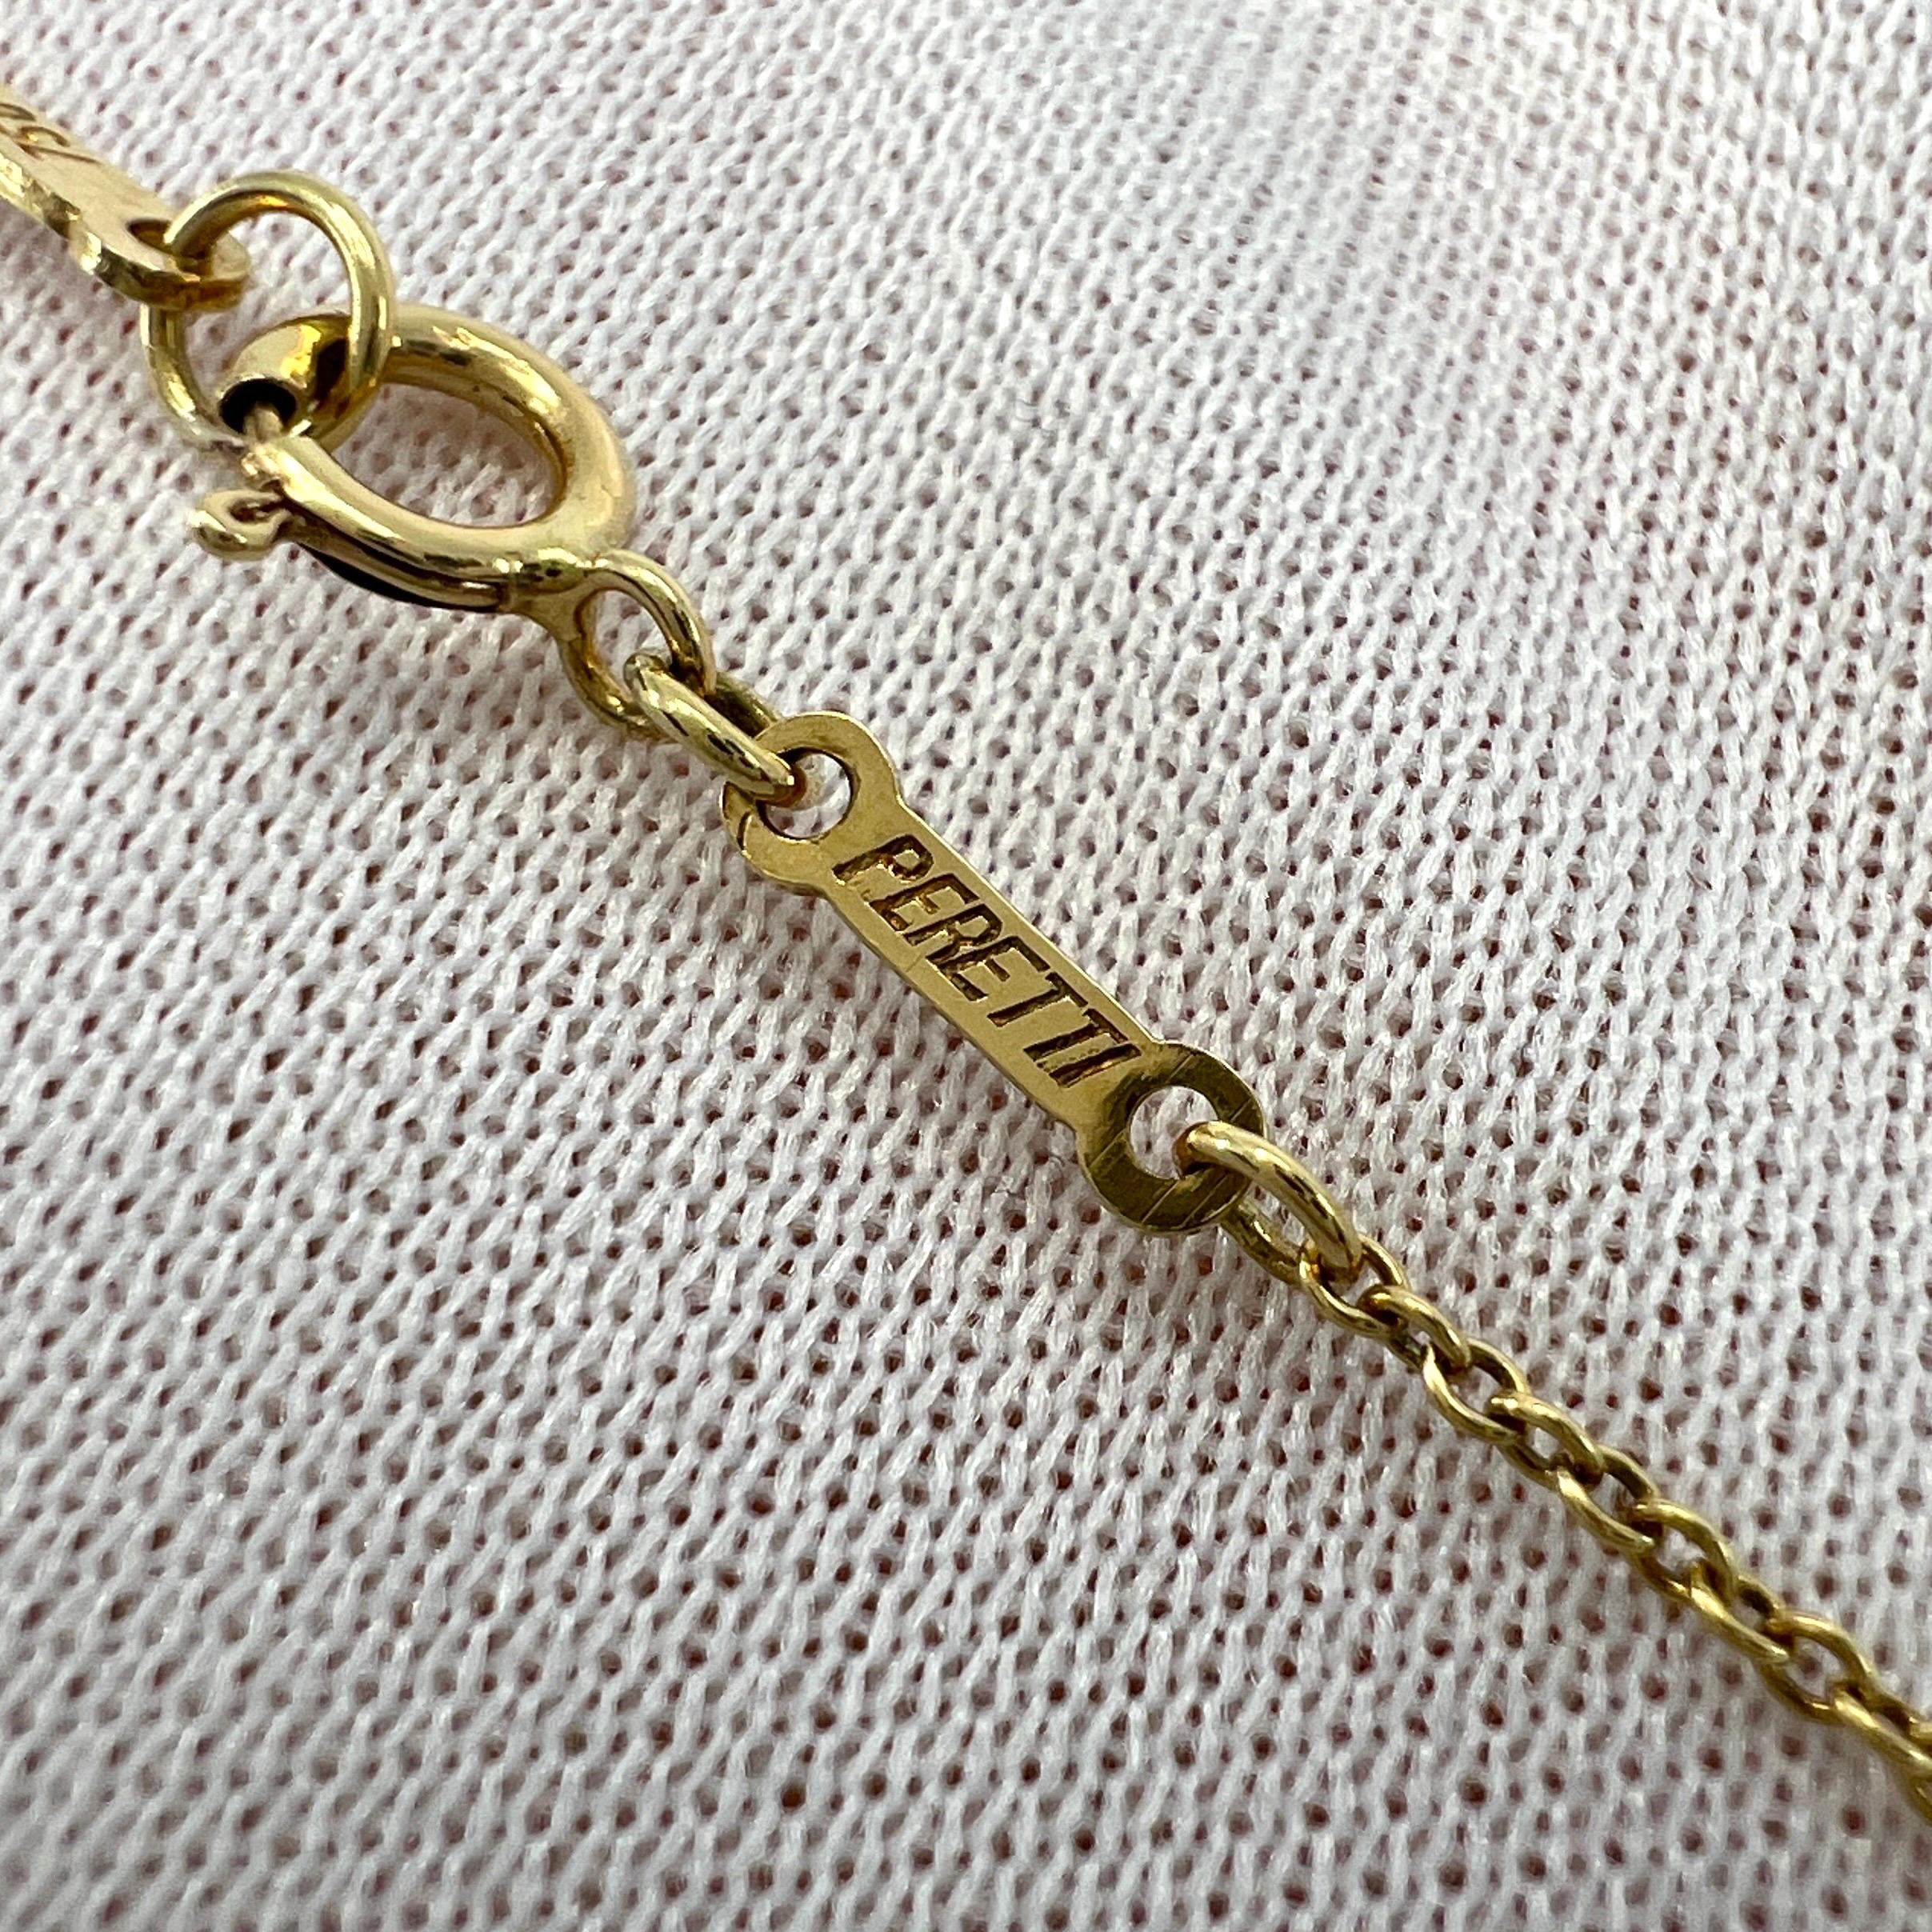 Tiffany & Co. Elsa Peretti Open Heart Diamond 18k Yellow Gold Pendant Necklace 4